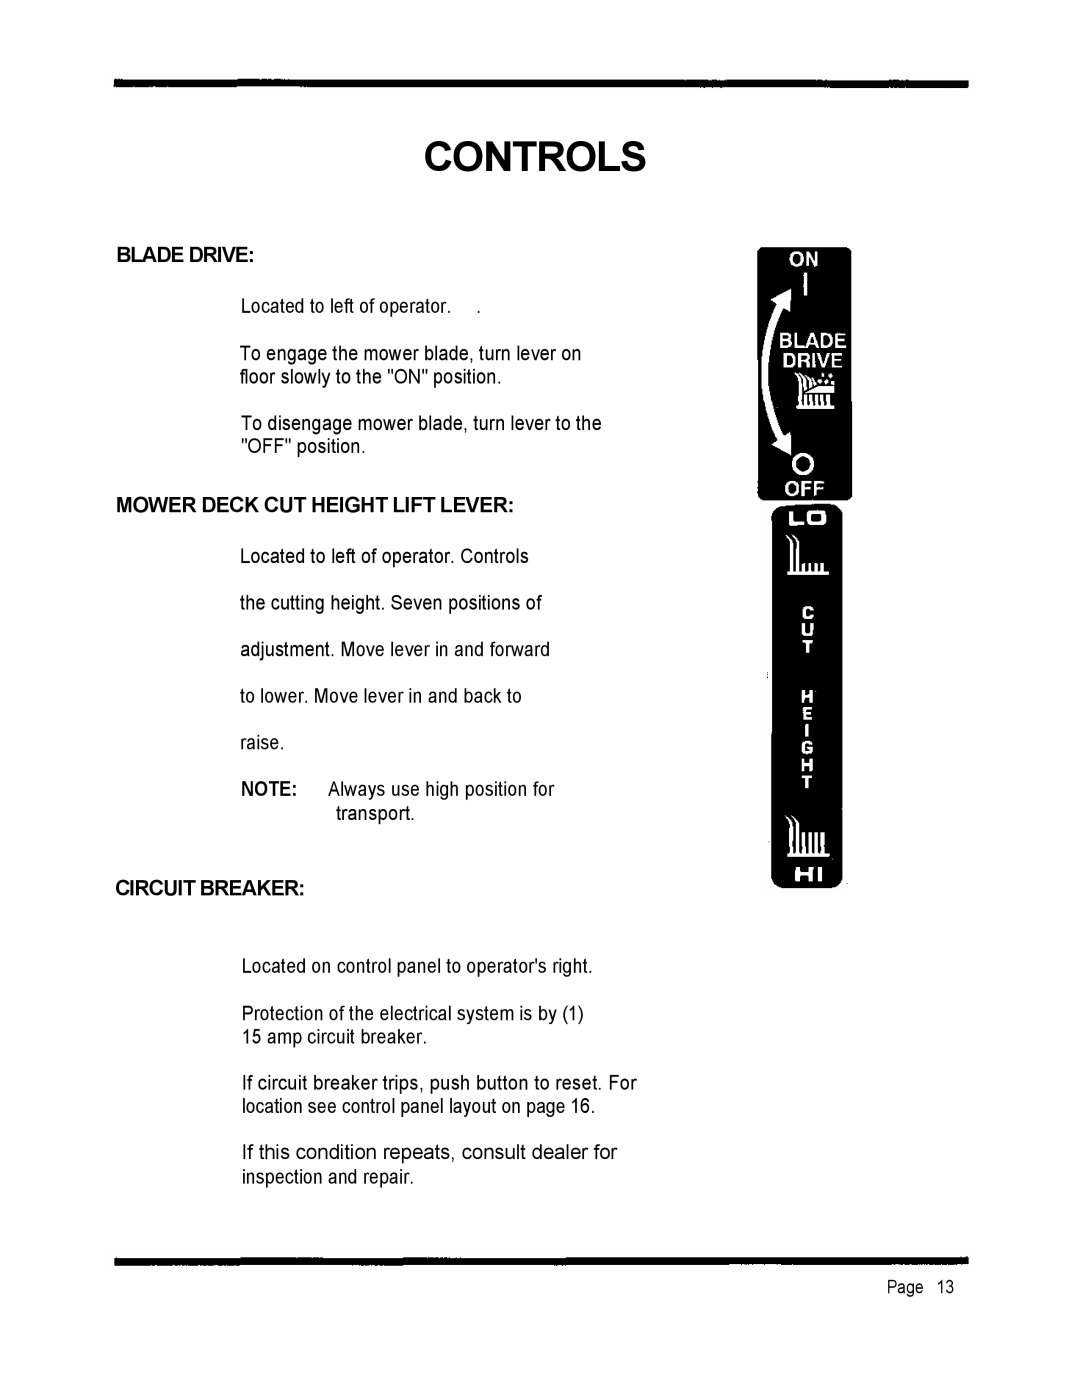 Dixon 2301 manual Controls, Blade Drive, Mower Deck Cut Height Lift Lever, Circuit Breaker 